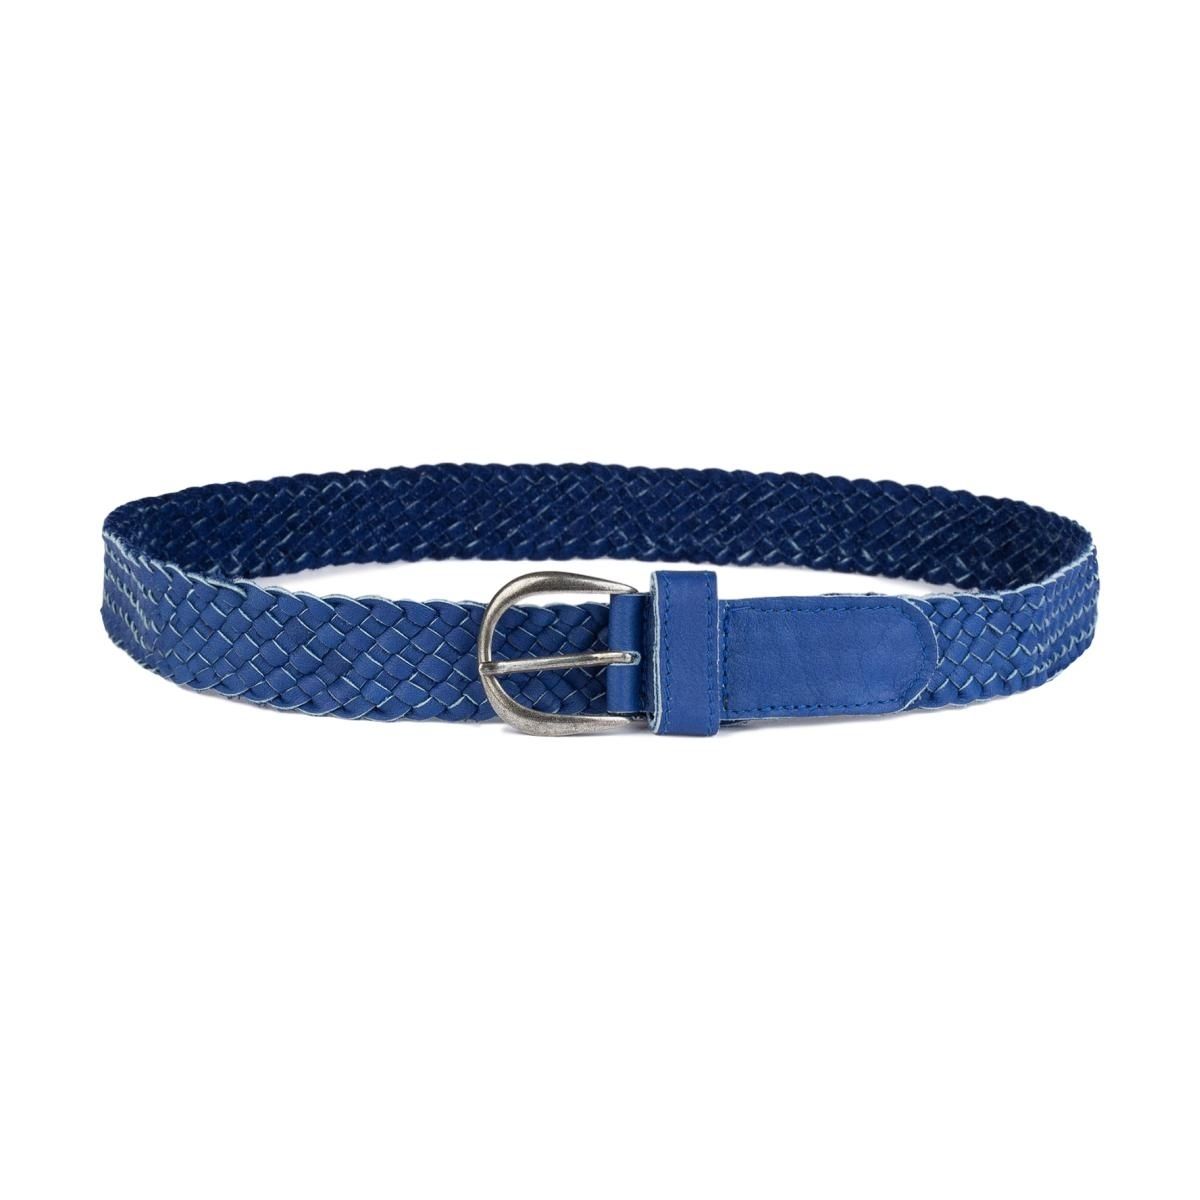 The Animals Observatory - Ibis belt blue - Belts & braces - 001122_187_OP 